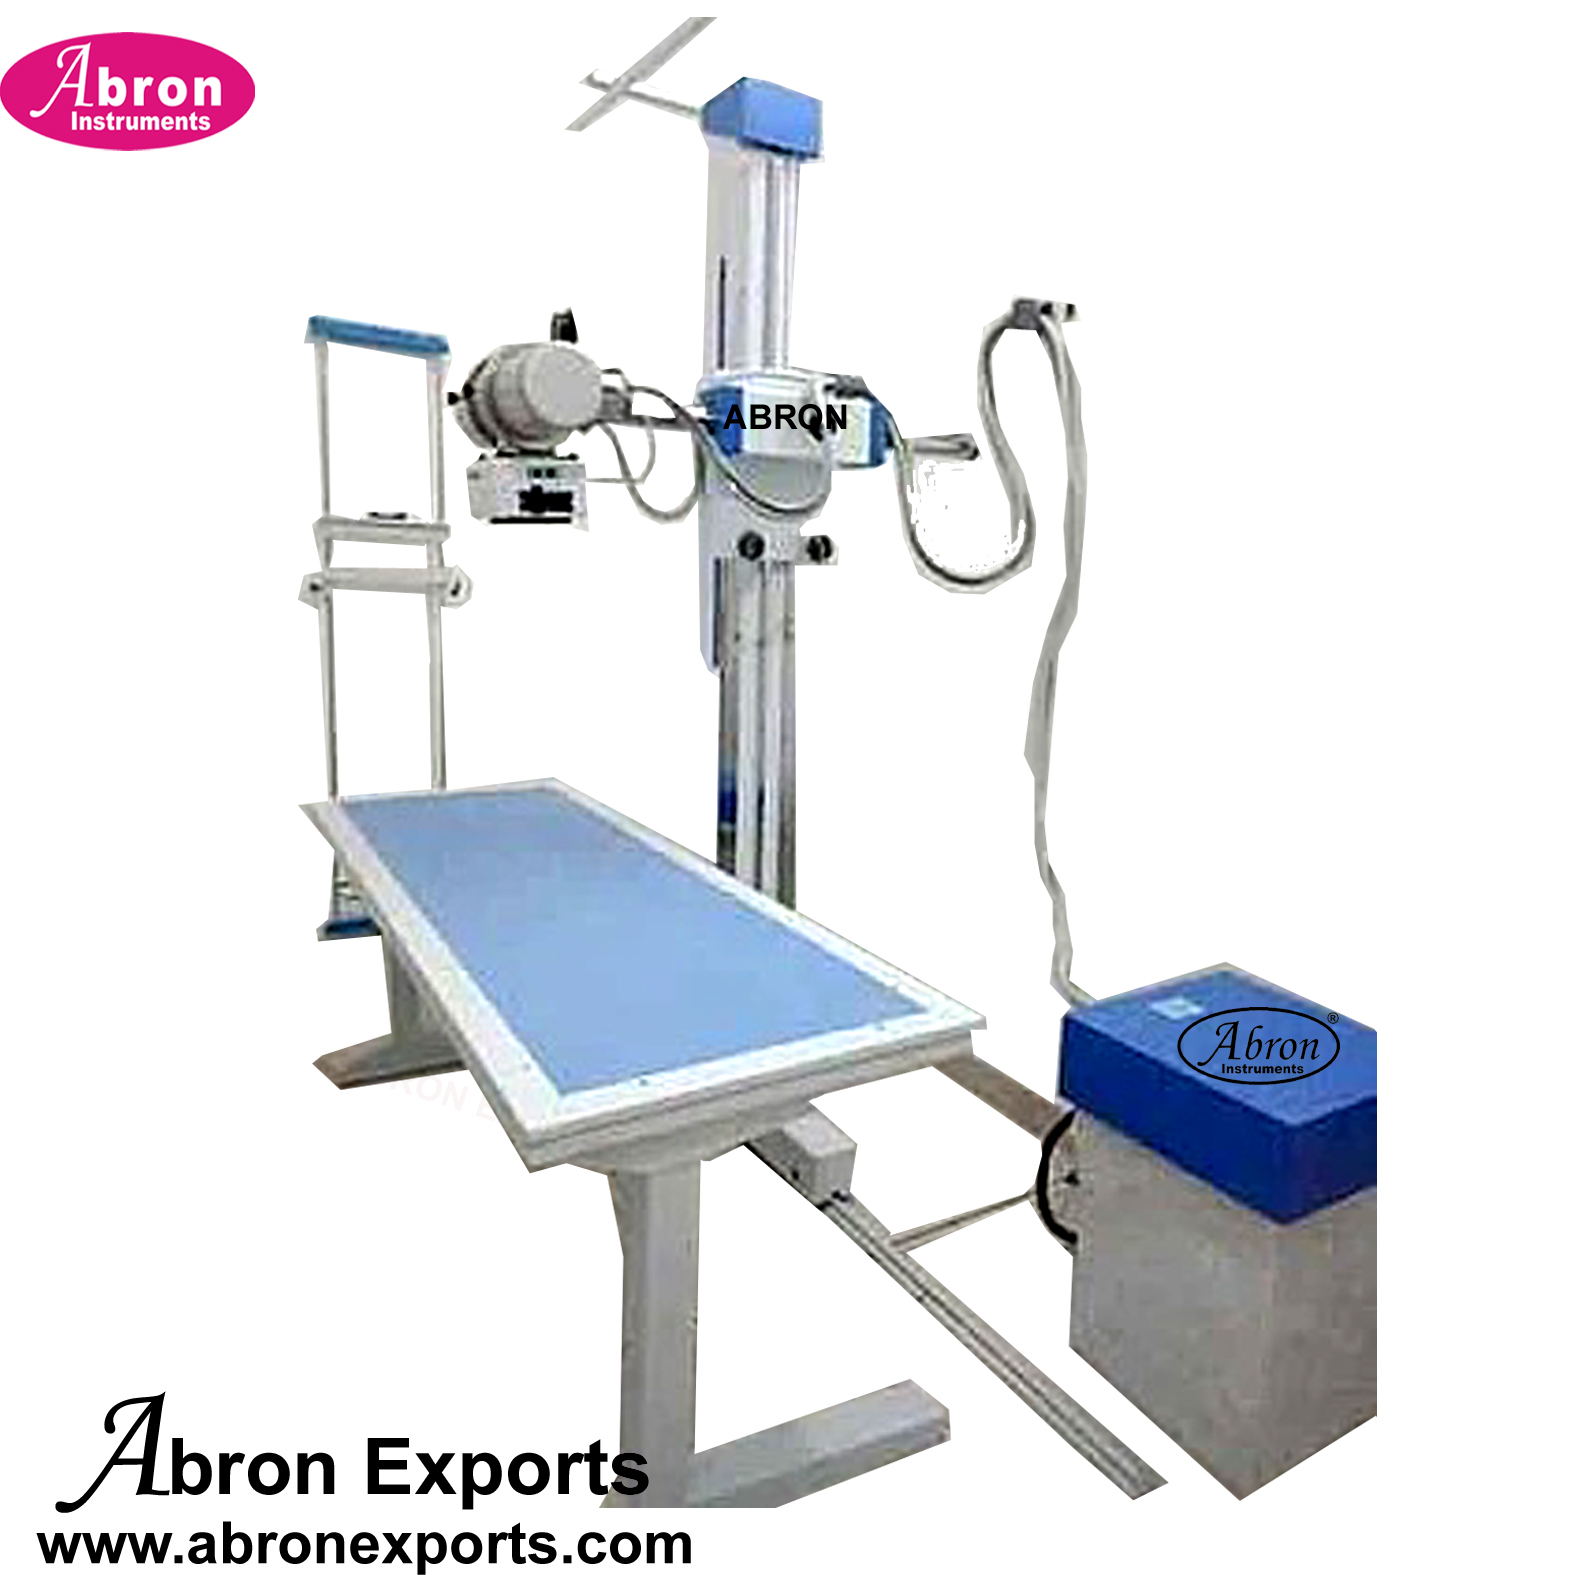 Ortho x-ray machine 300mA fixed with controller and stand platform setup Nursing Home Hospital Abron ABM-2782F3HA 